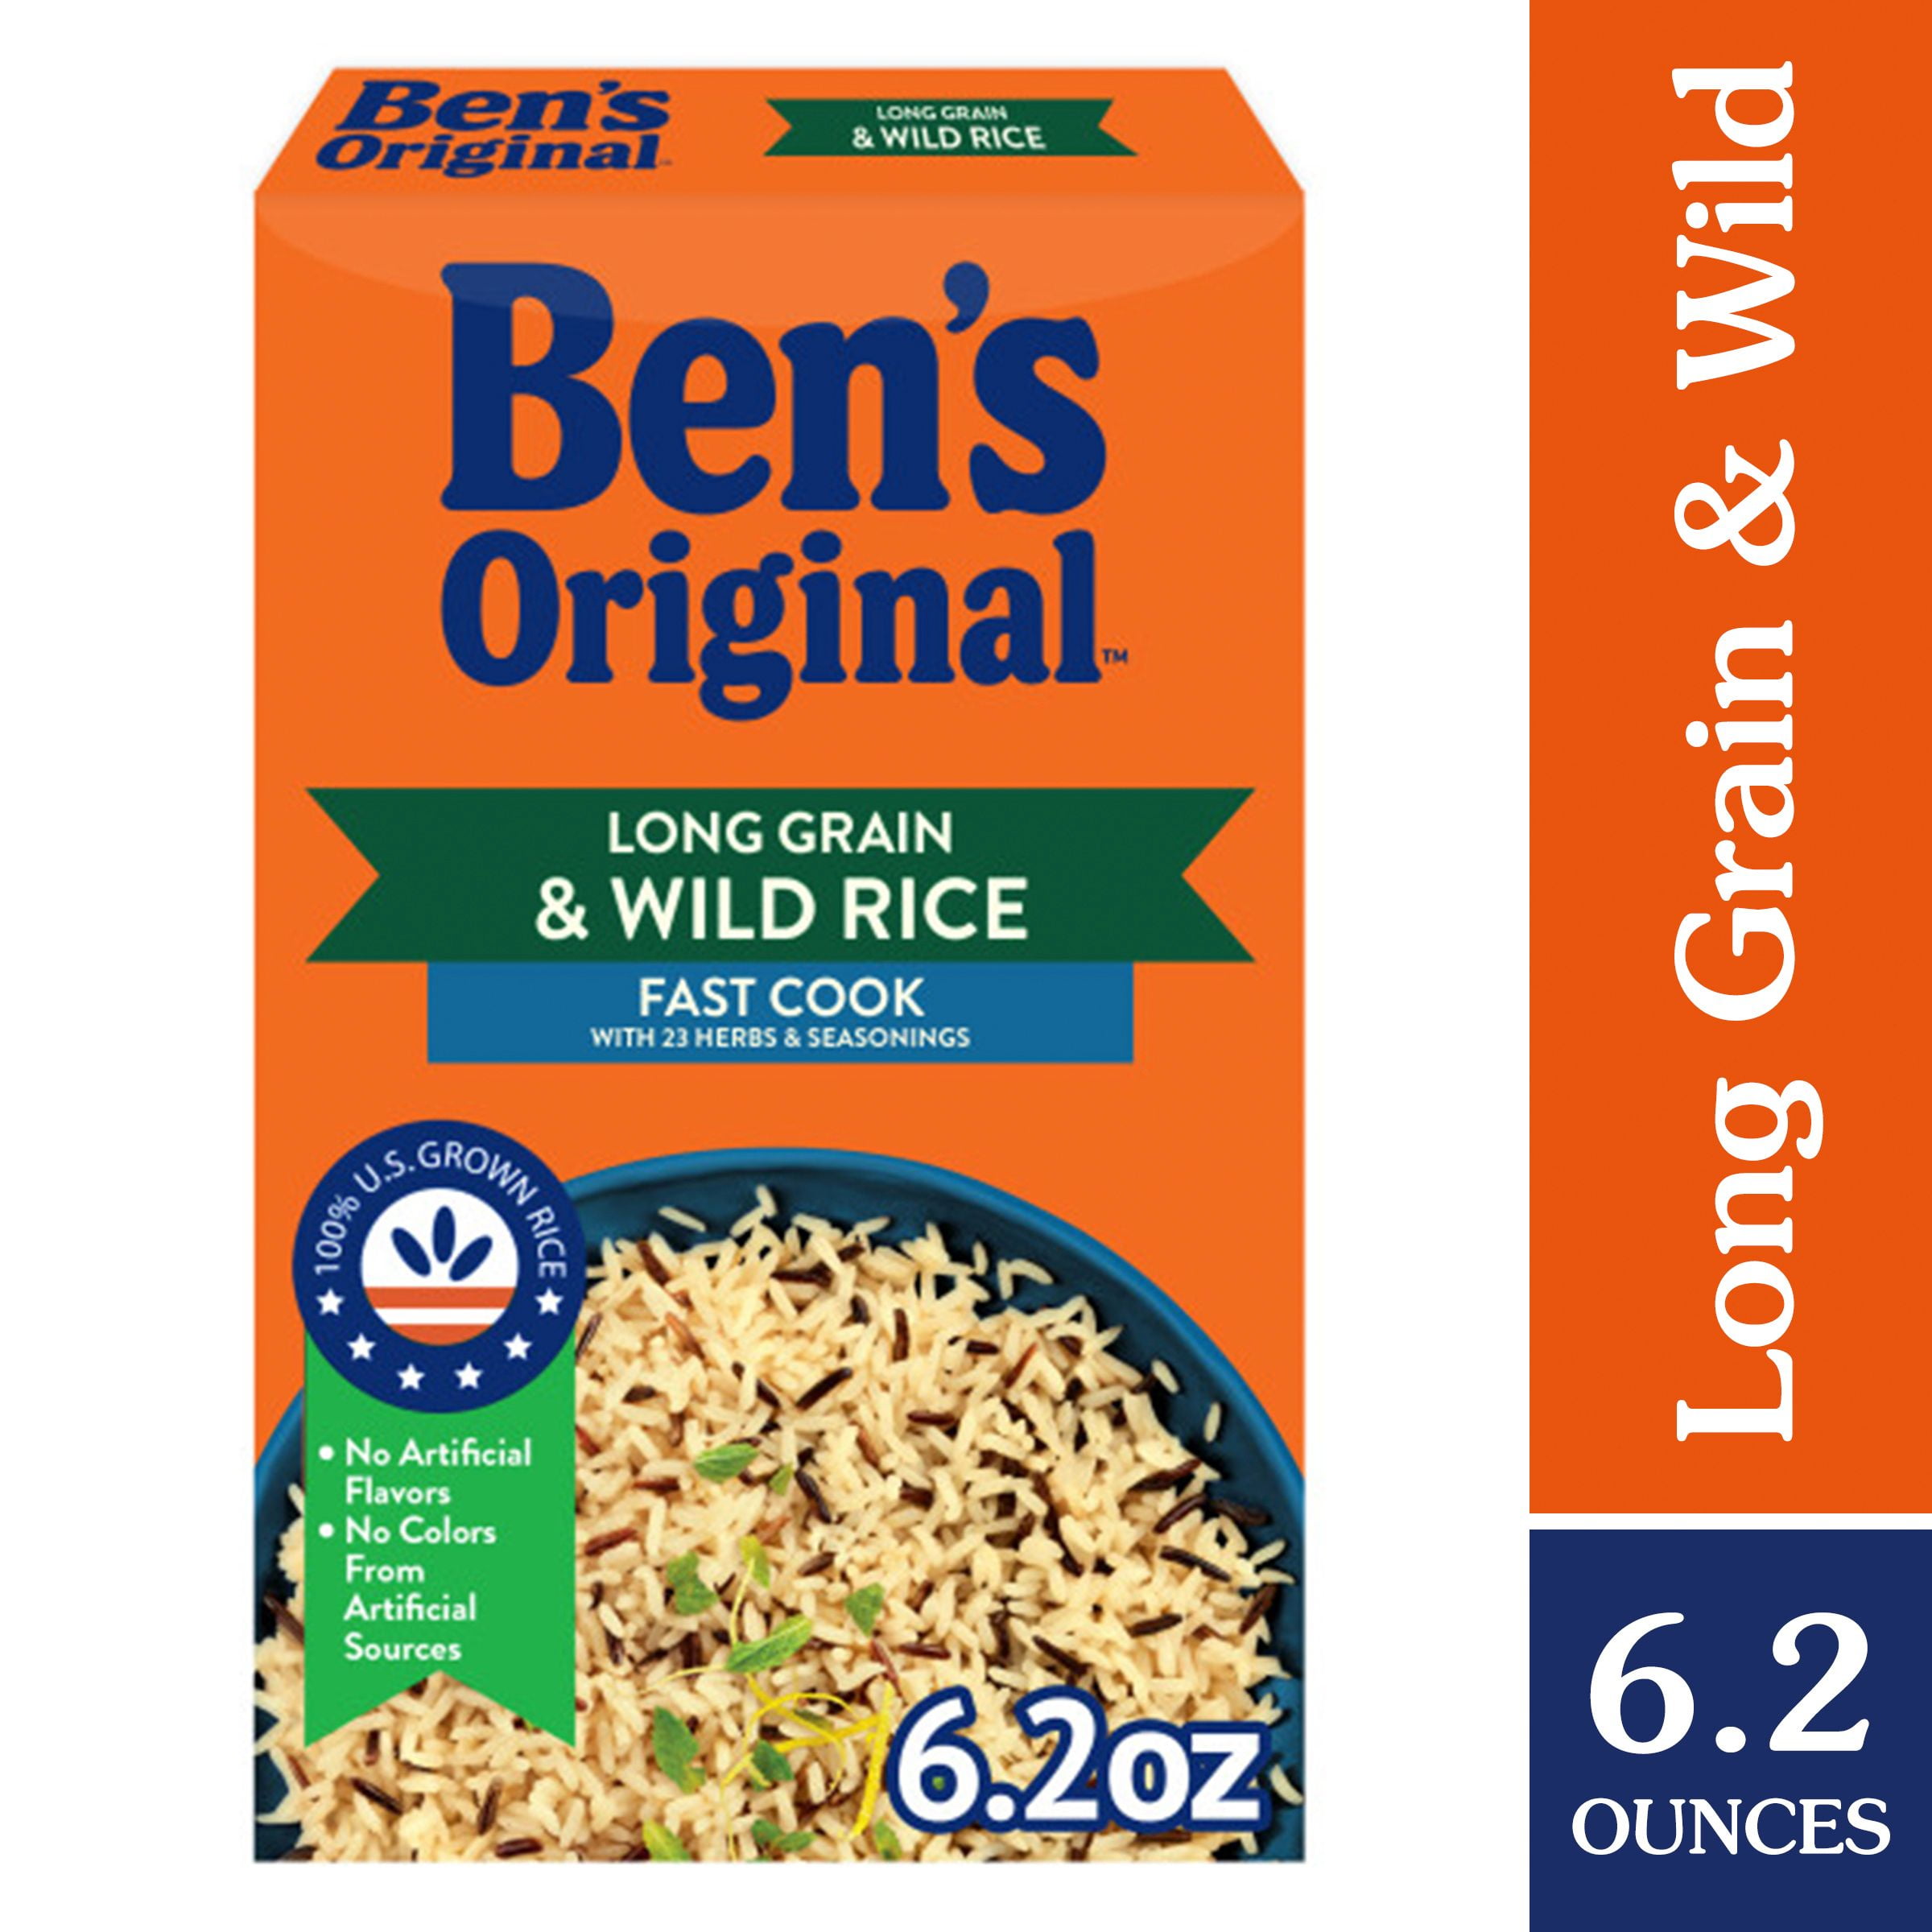 BEN'S ORIGINAL Long Grain Rice and Wild Rice, Fast Cook Rice, 6.2 OZ Box